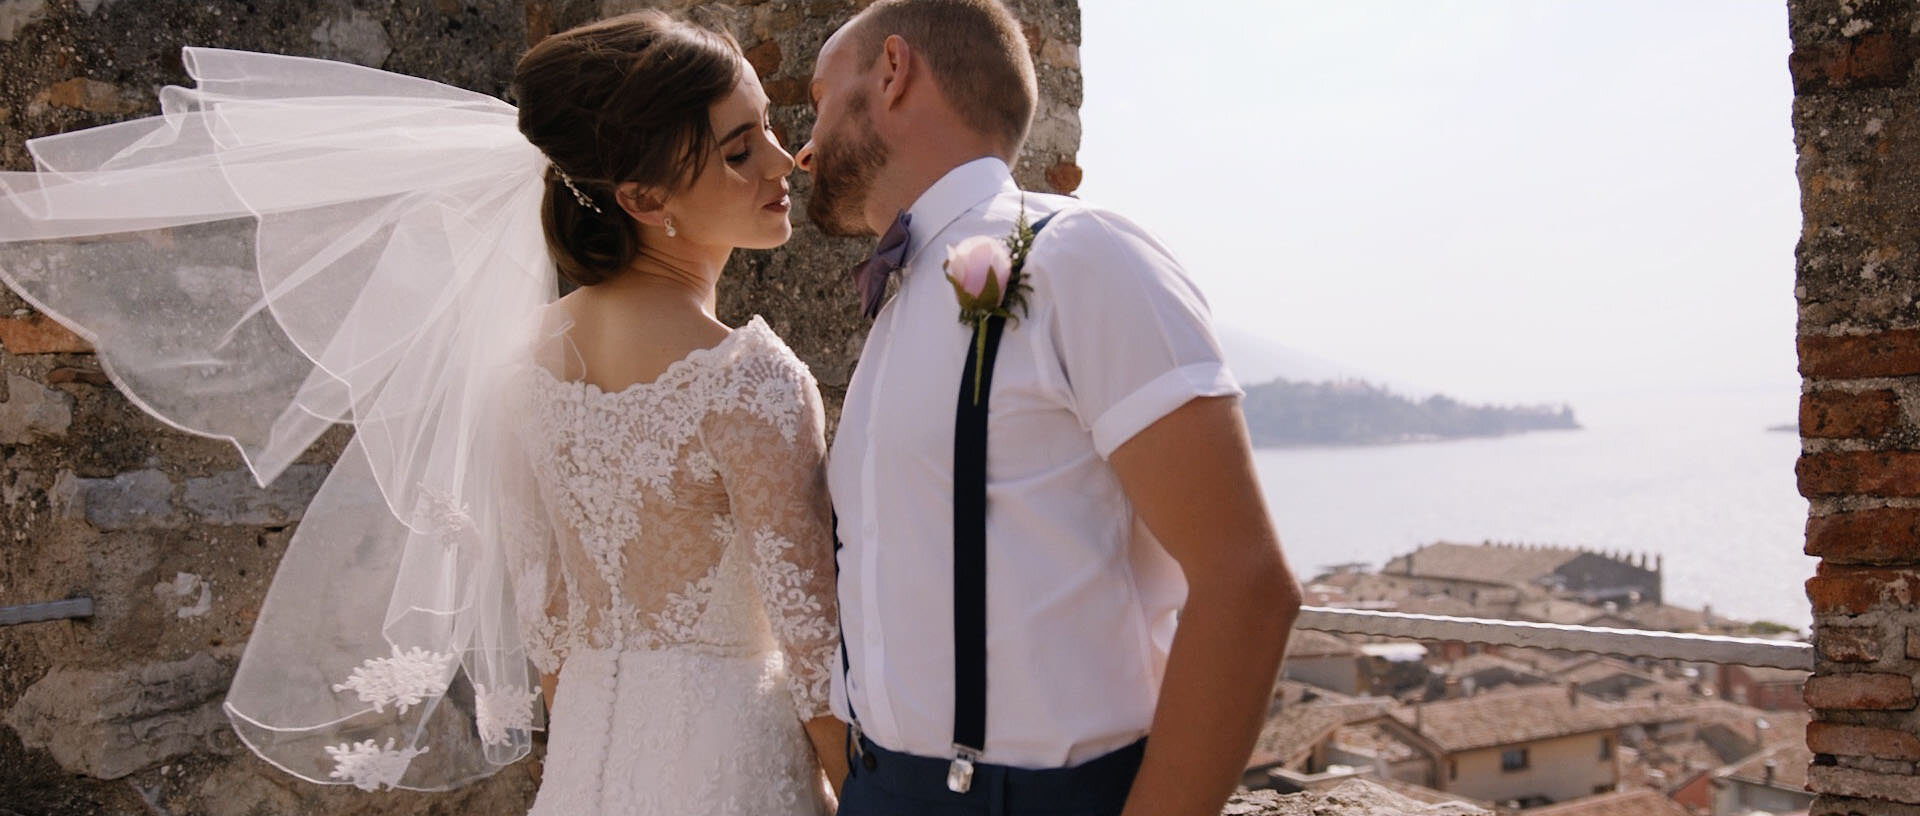 Lisa & Josh's Perfect Malcesine Wedding at Lake Garda 26.jpg